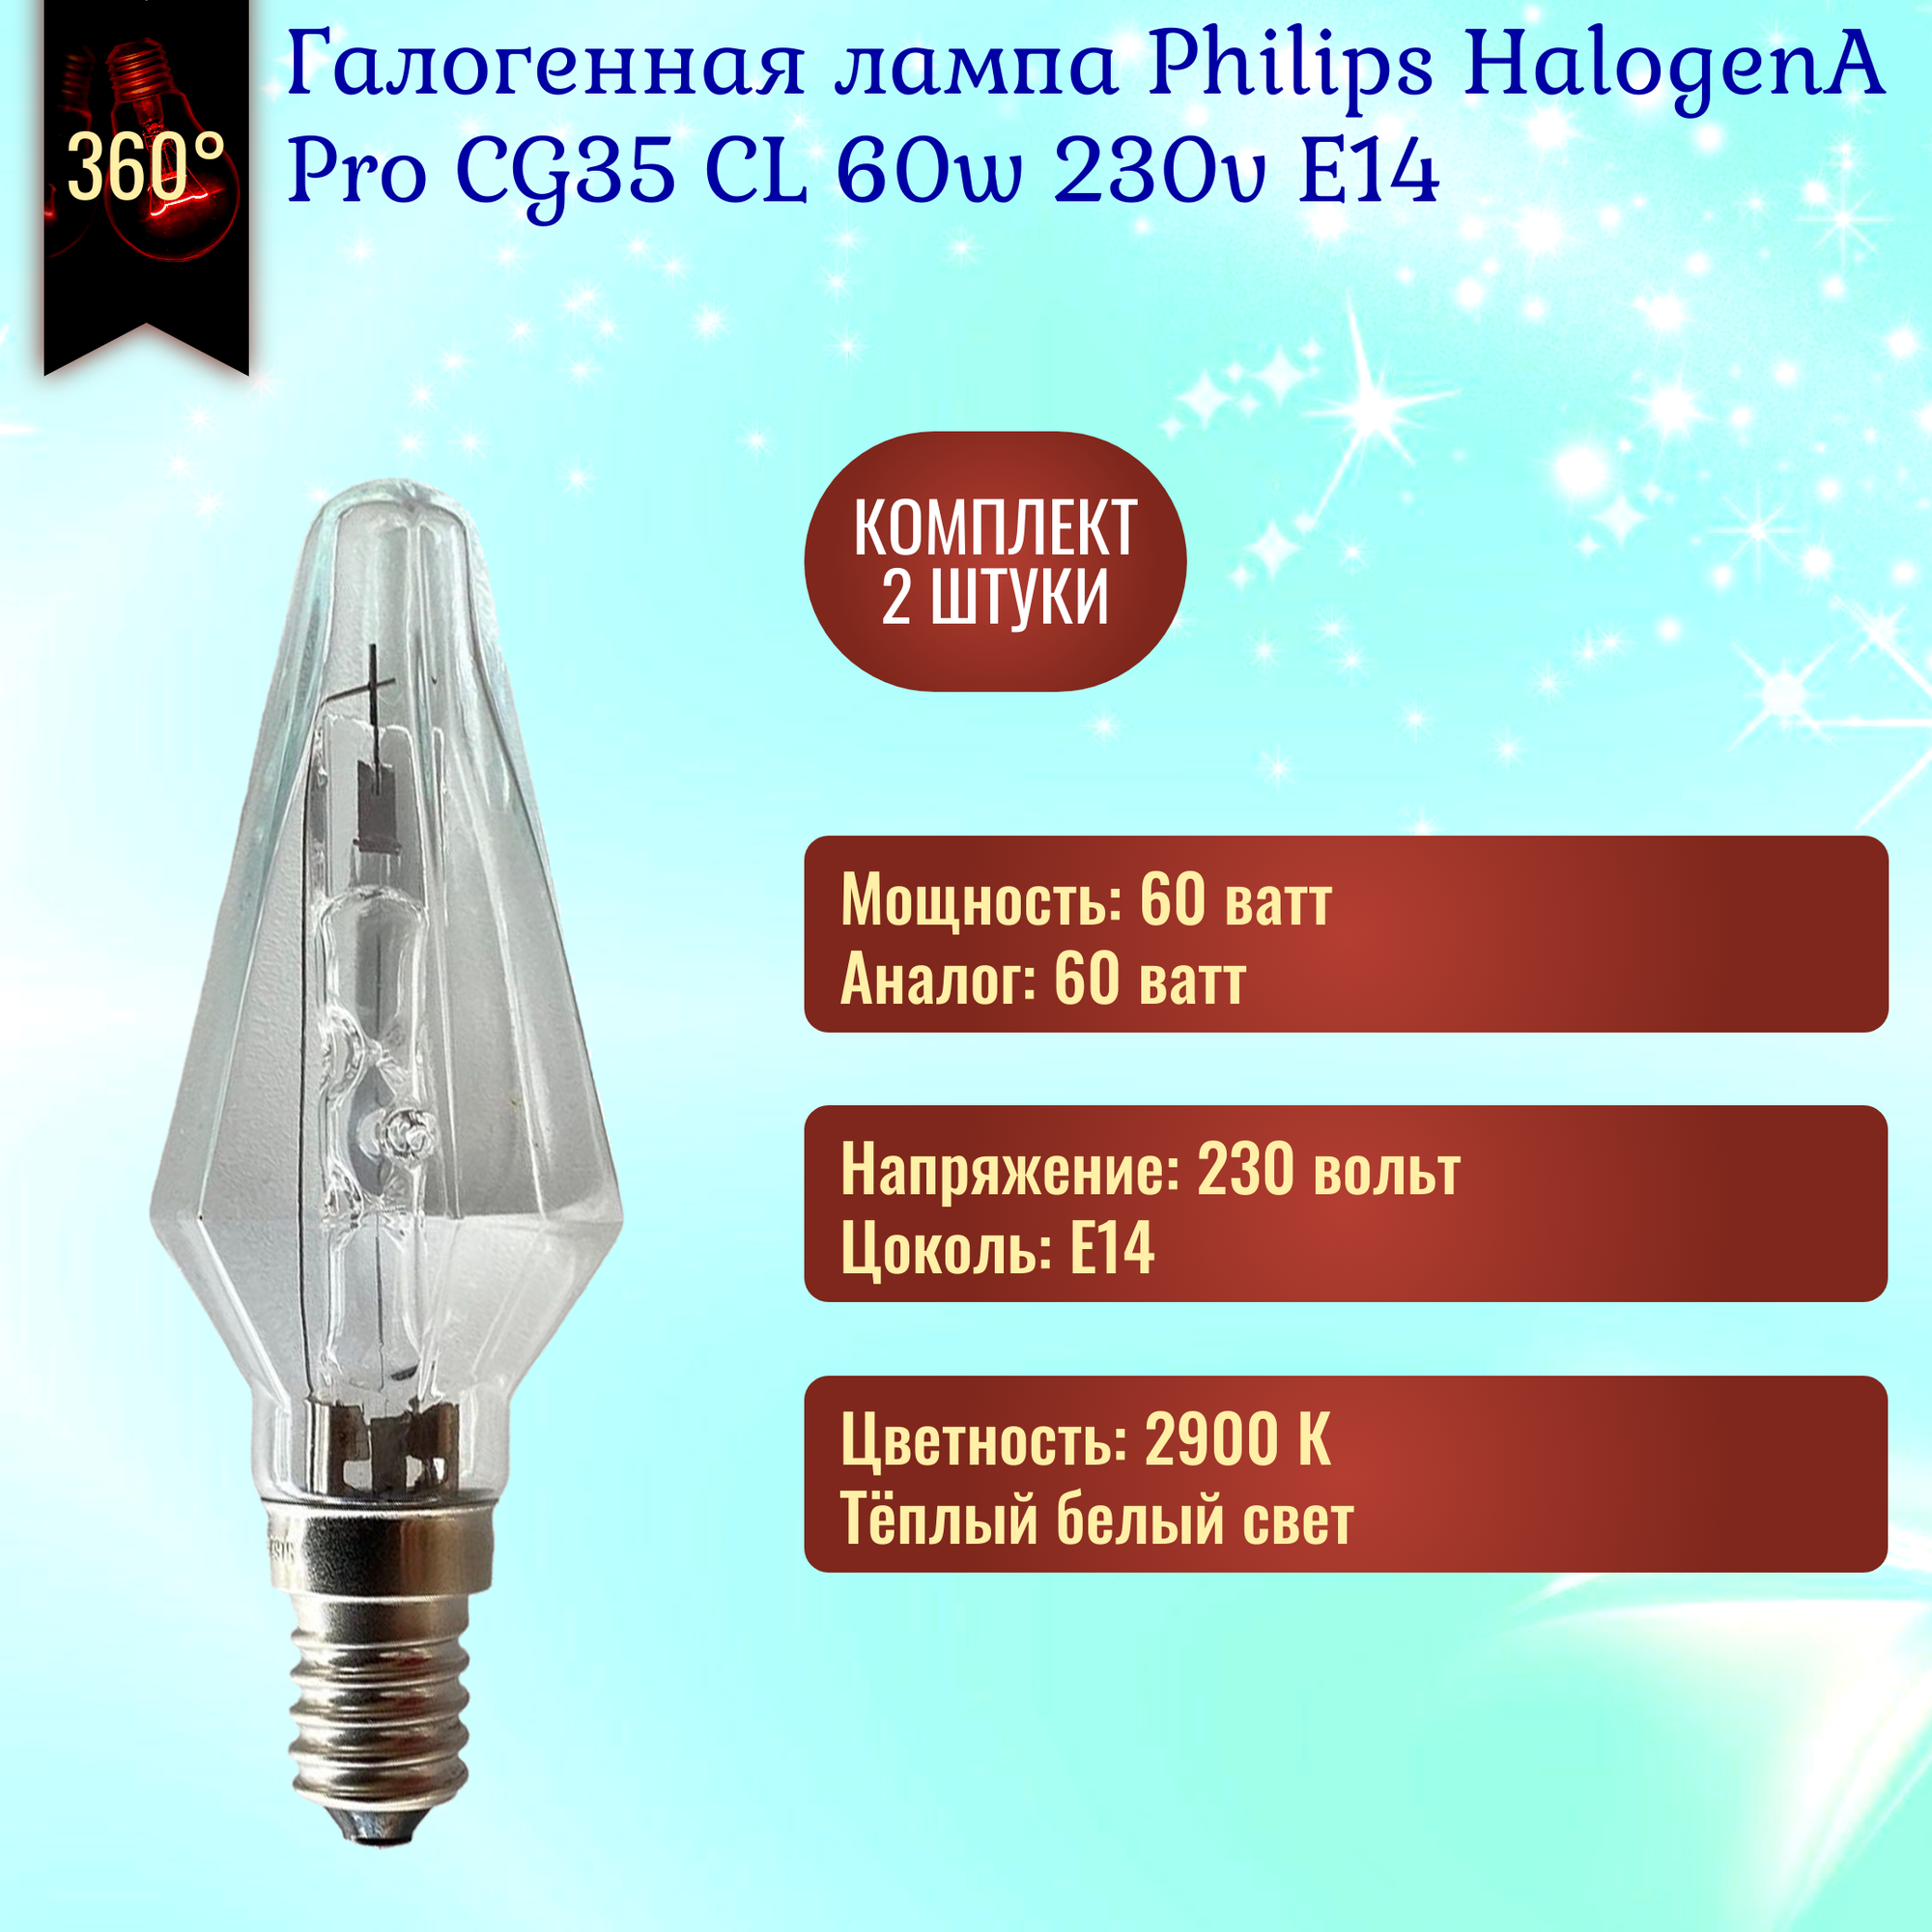 Лампочка Philips Halogen A Pro CG35 CL 60w 230v E14 галогенная, теплый белый свет / 2 штуки